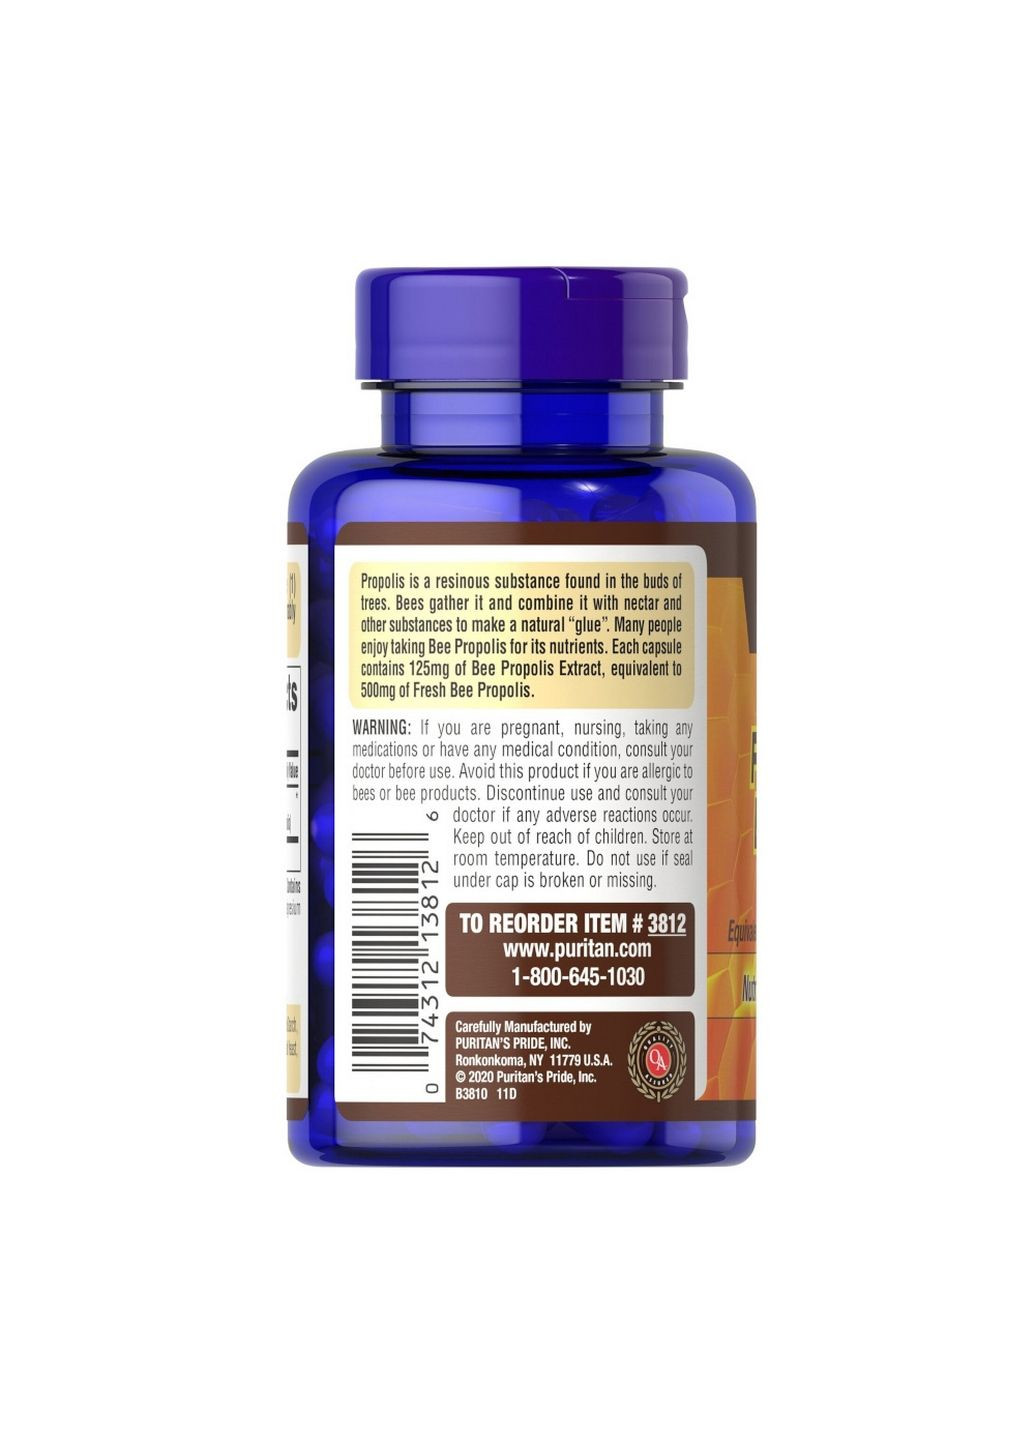 Натуральная добавка Bee Propolis Extract 125 mg, 100 капсул Puritans Pride (293417485)